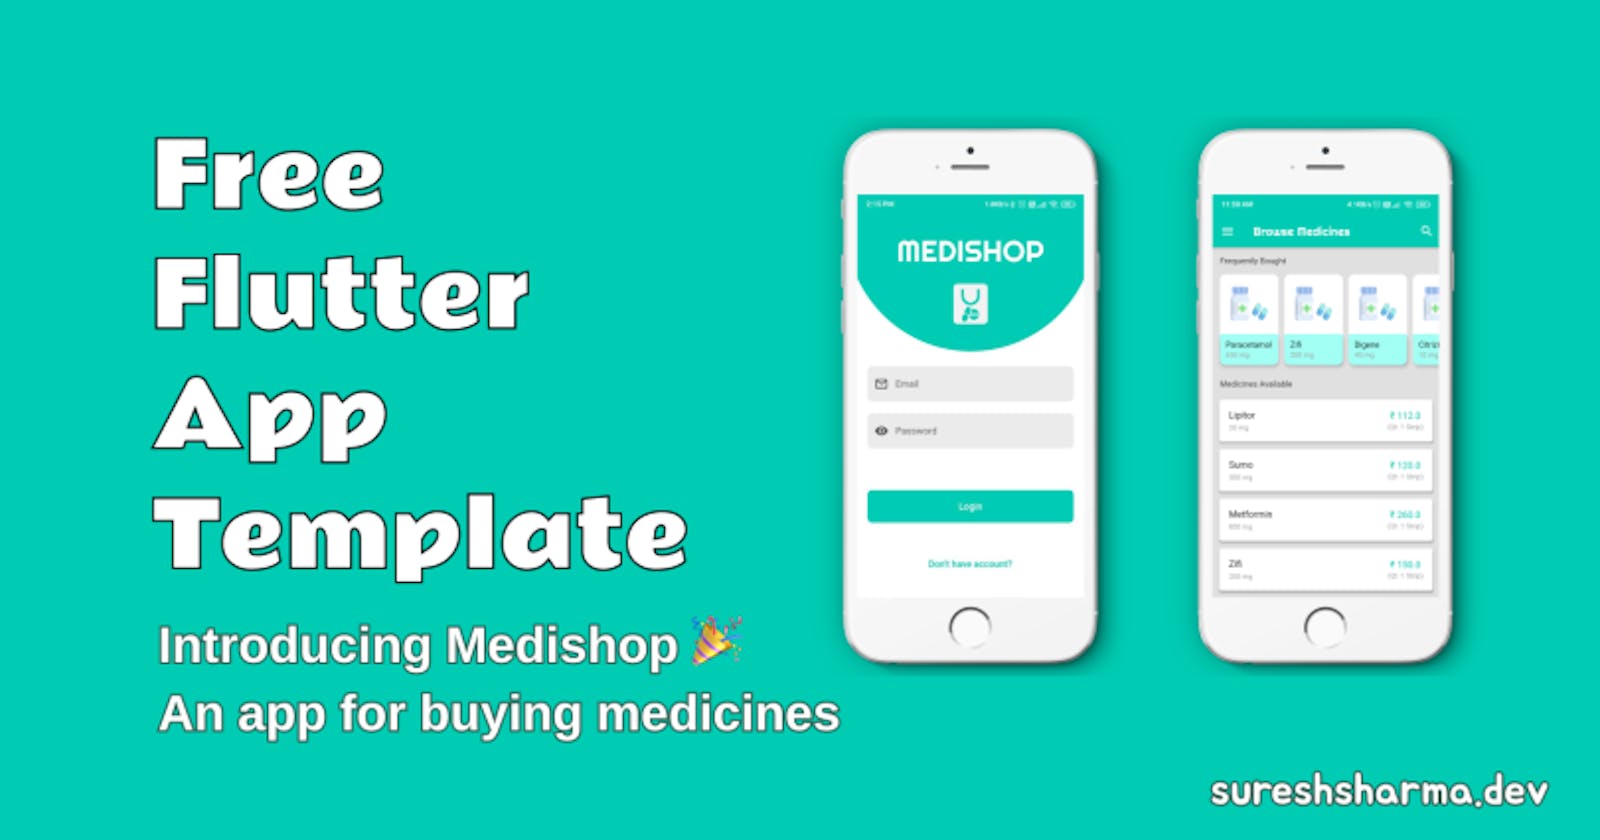 Introducing Medishop: Free Flutter App Template